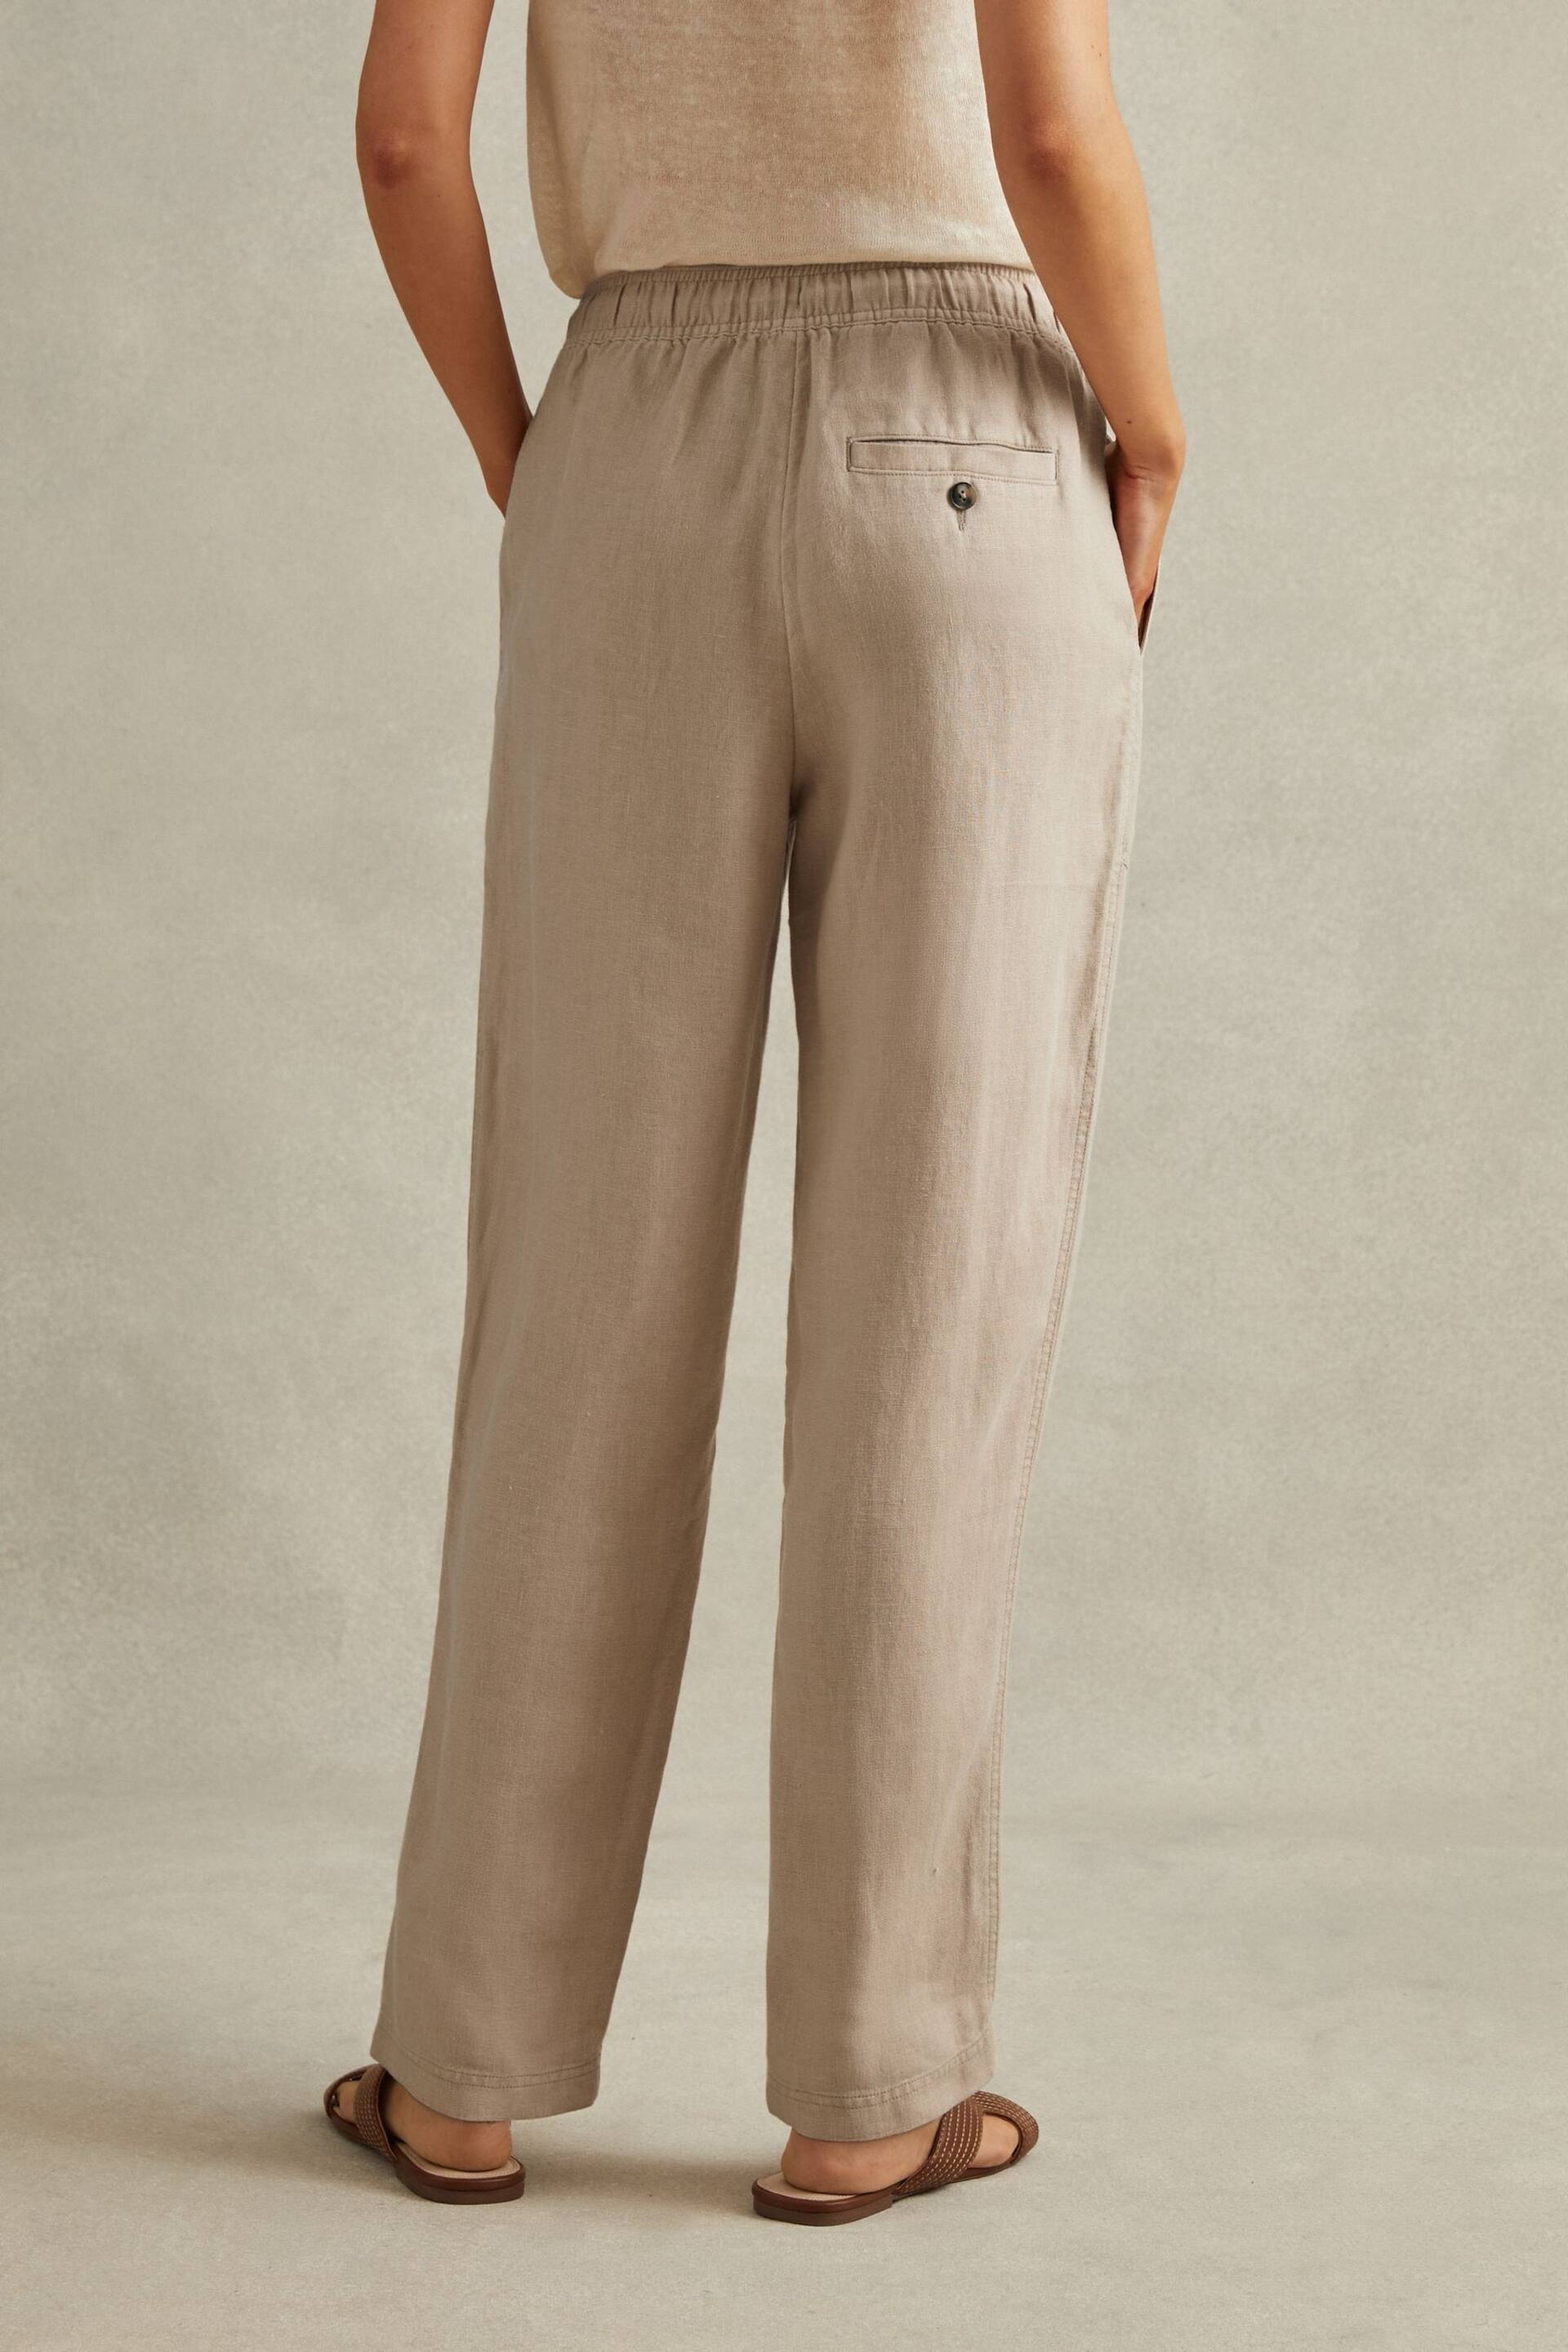 Reiss Sand Romie Drawstring Linen Trousers - Image 5 of 6